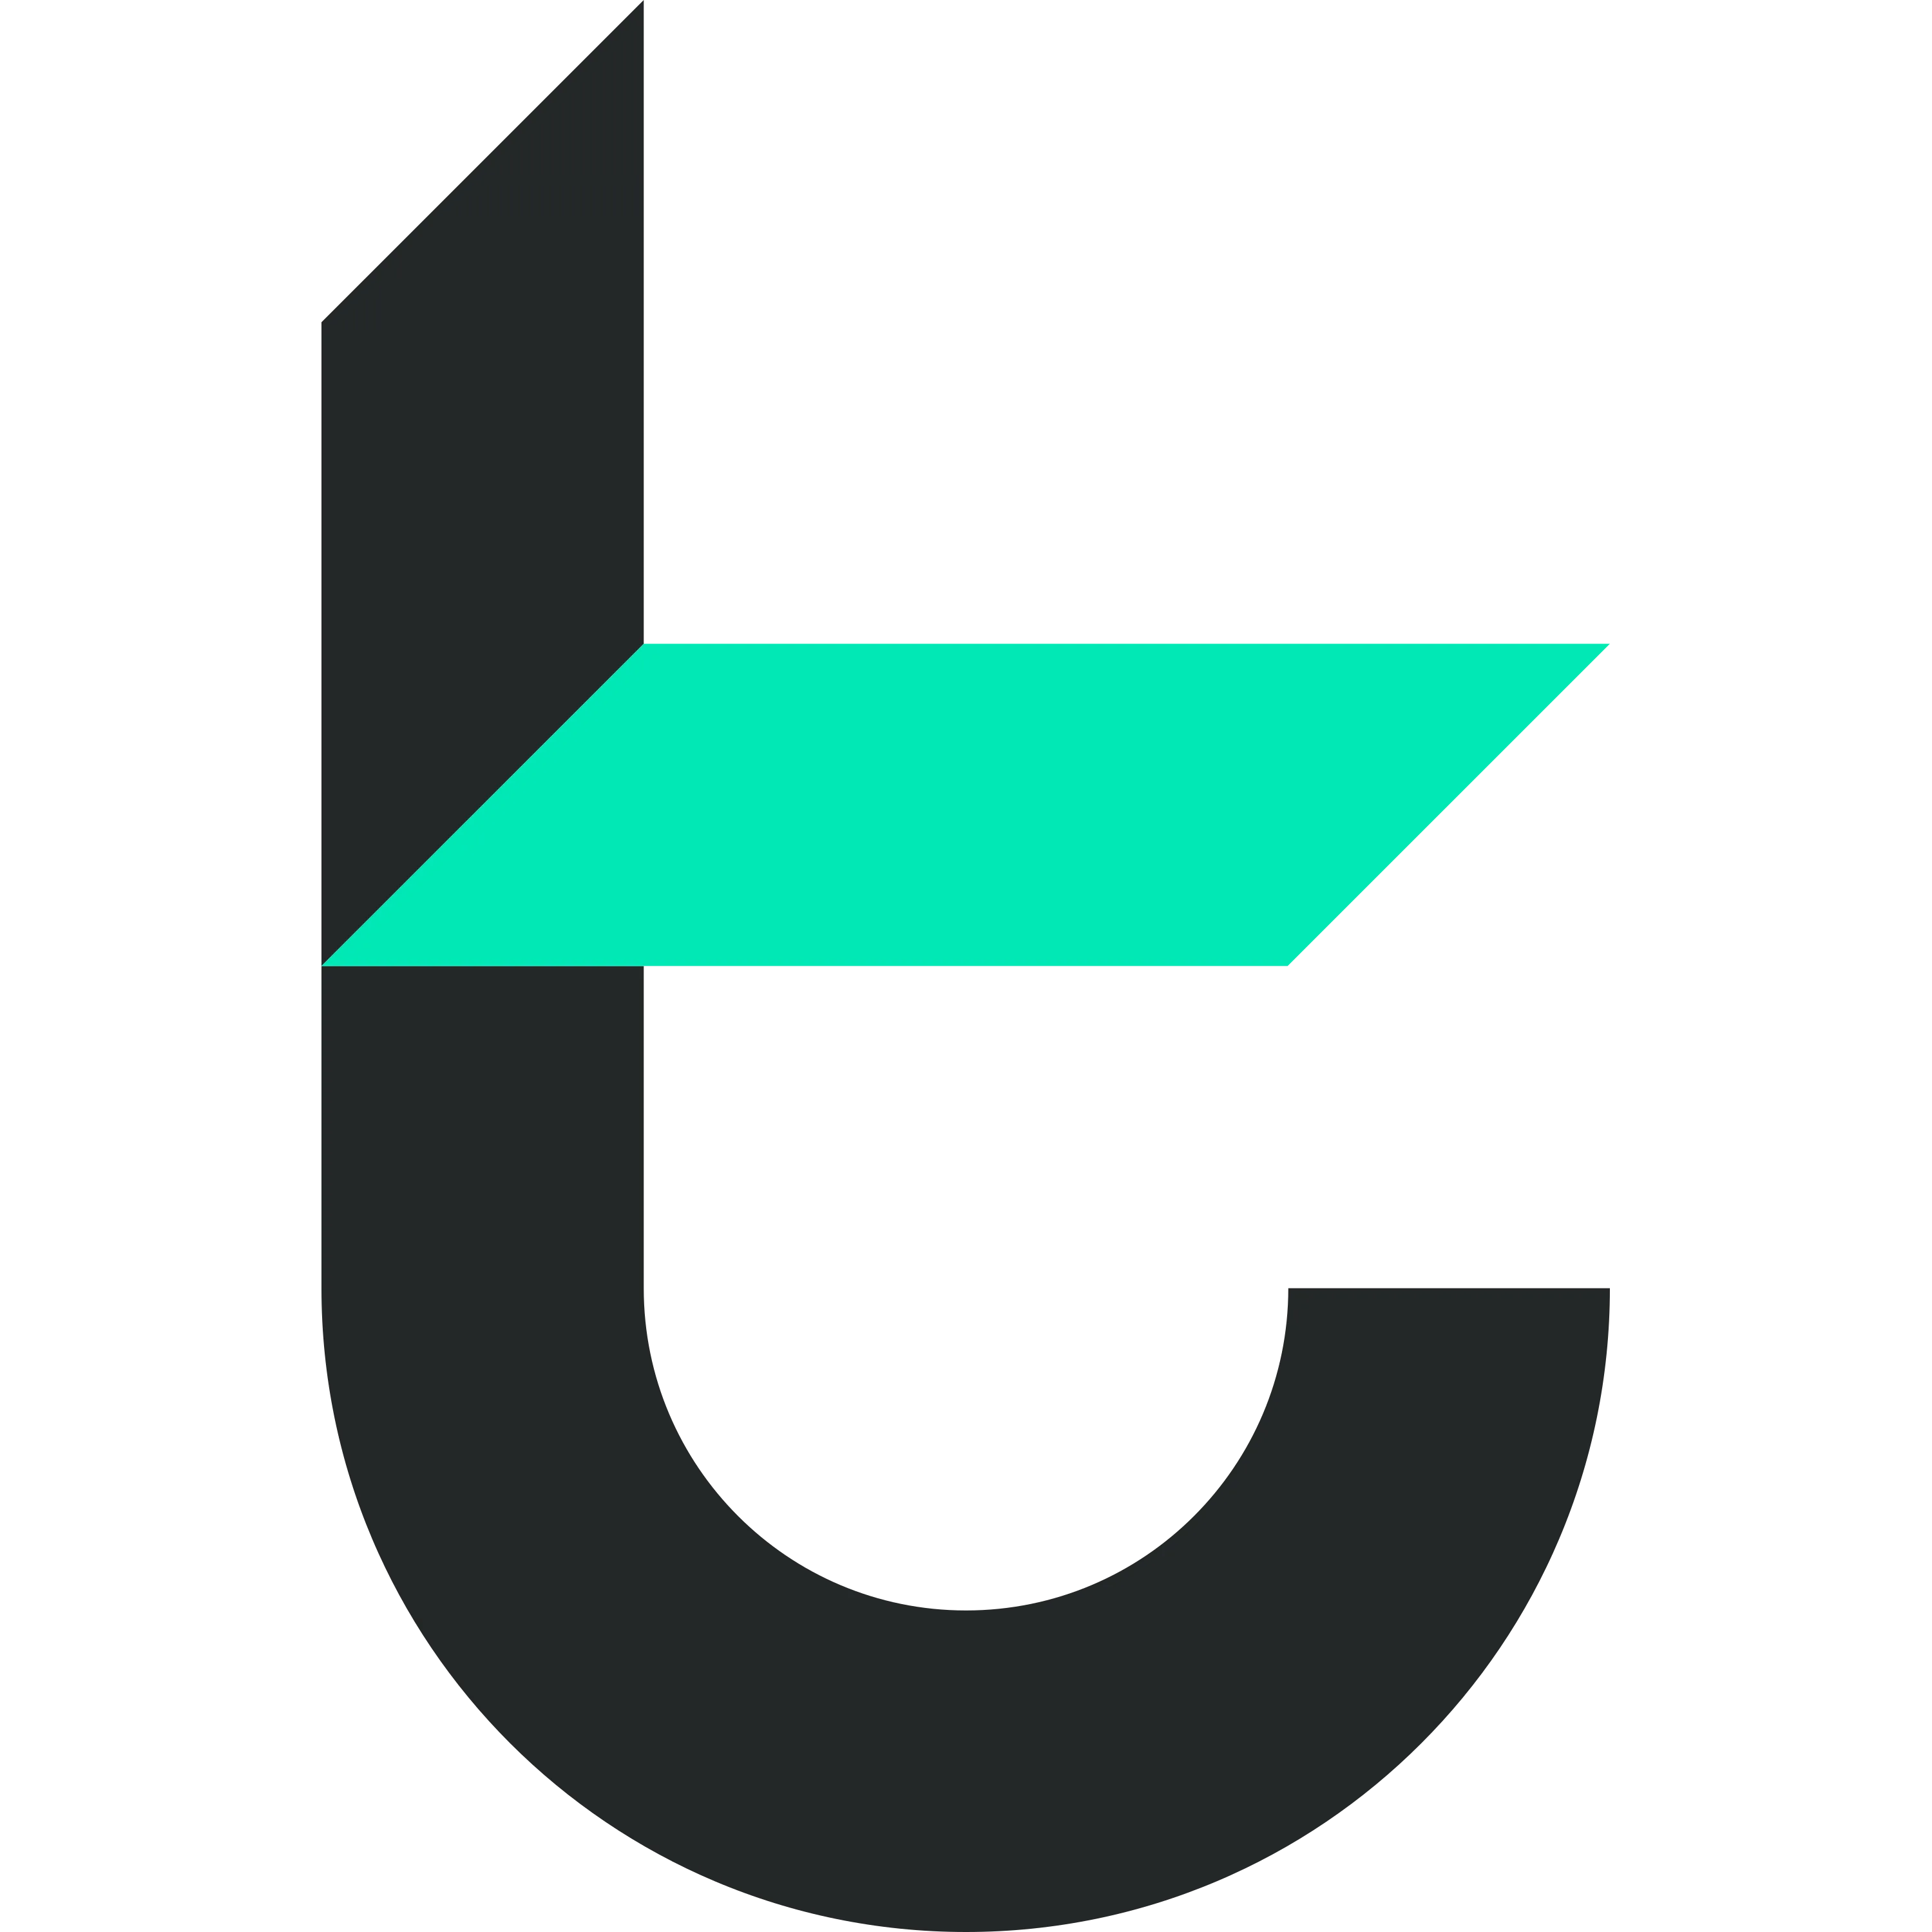 TomoChain (TOMO) logo